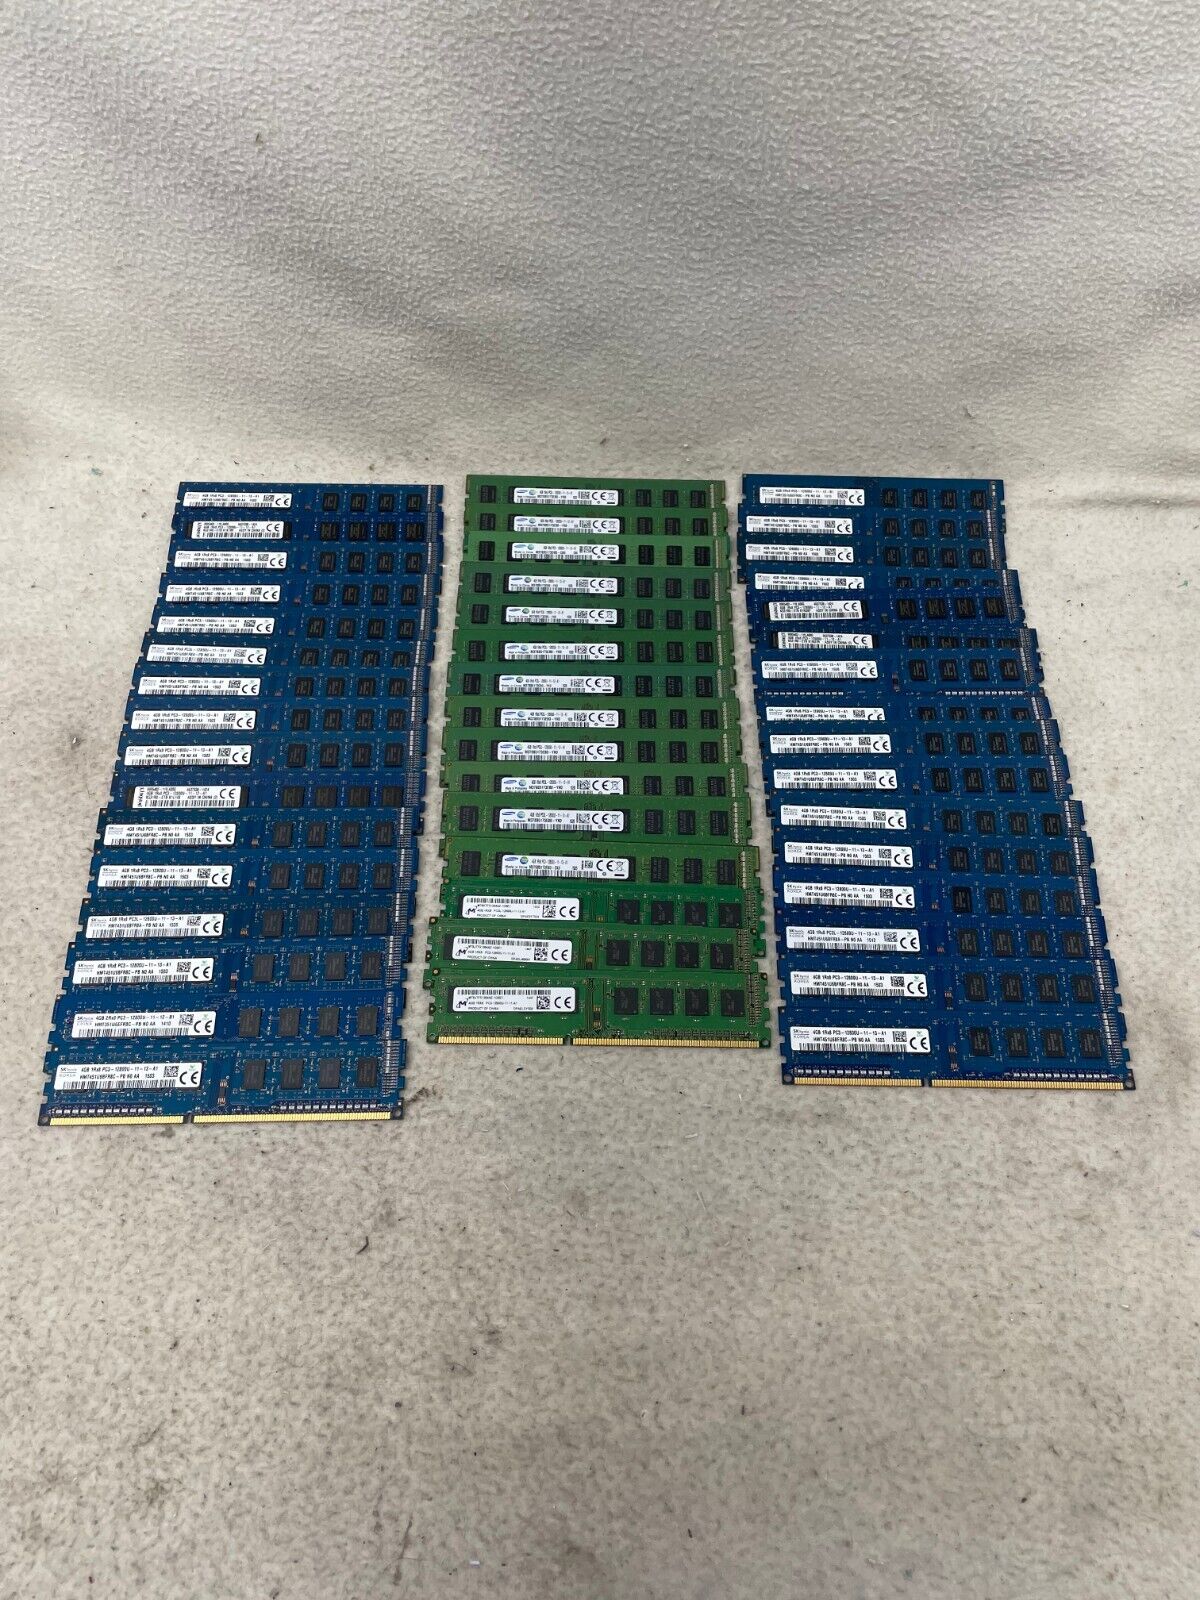 Lot of 47 4gb ddr3 Sticks of Desktop Ram, Various Name Brands & Speeds, Working